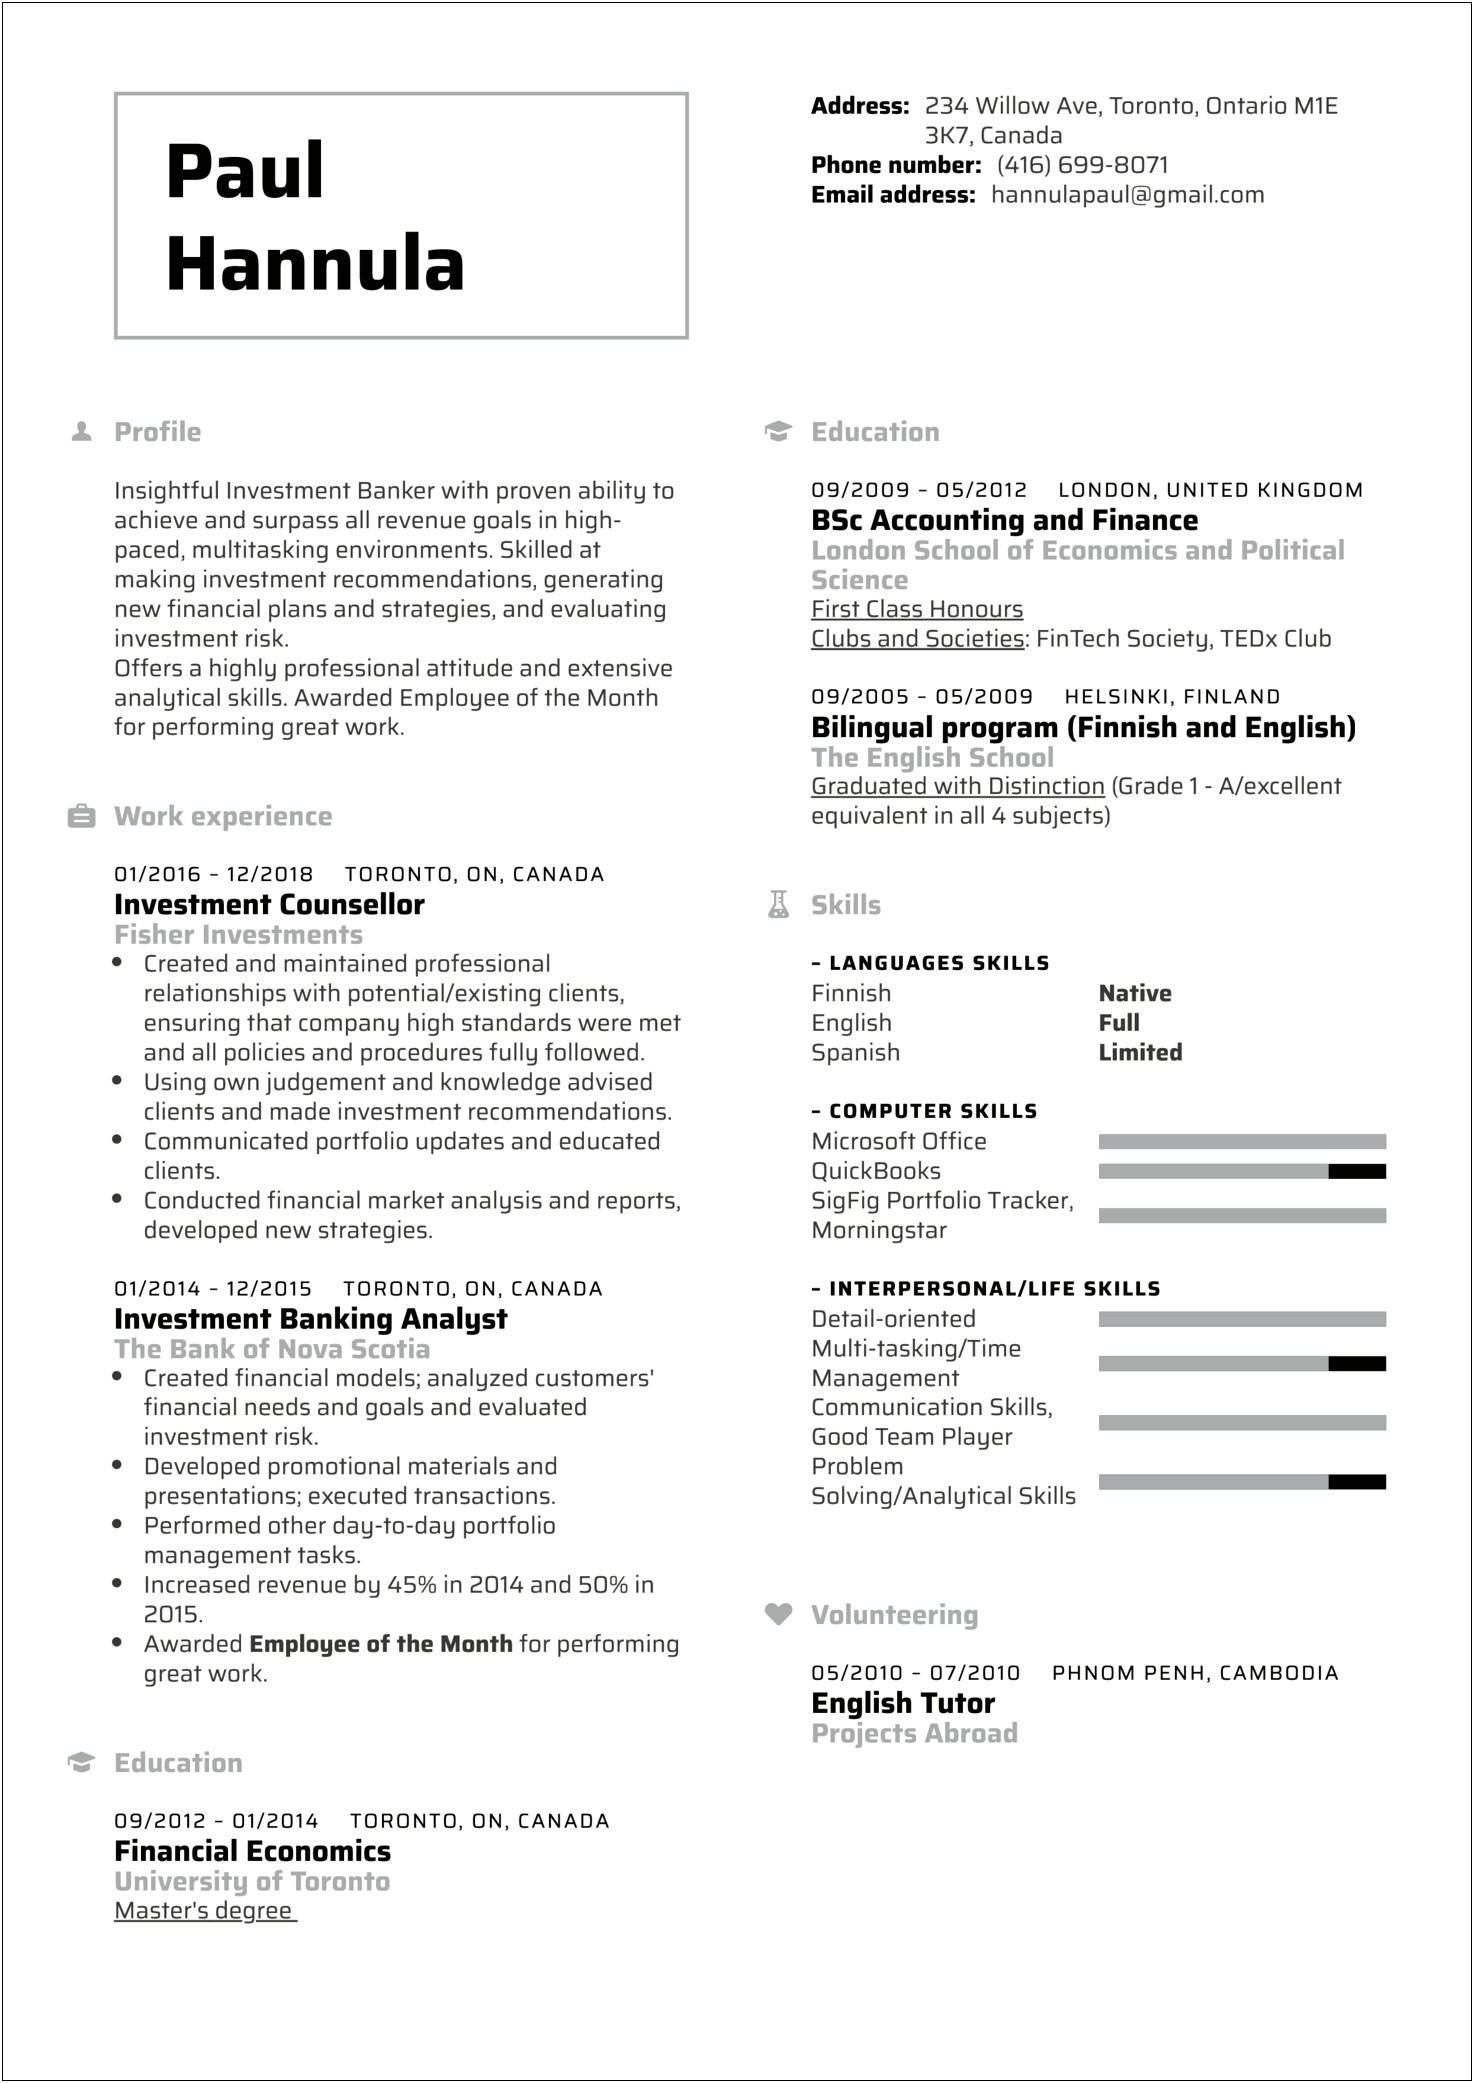 Personal Namkig Specialist Resume Example